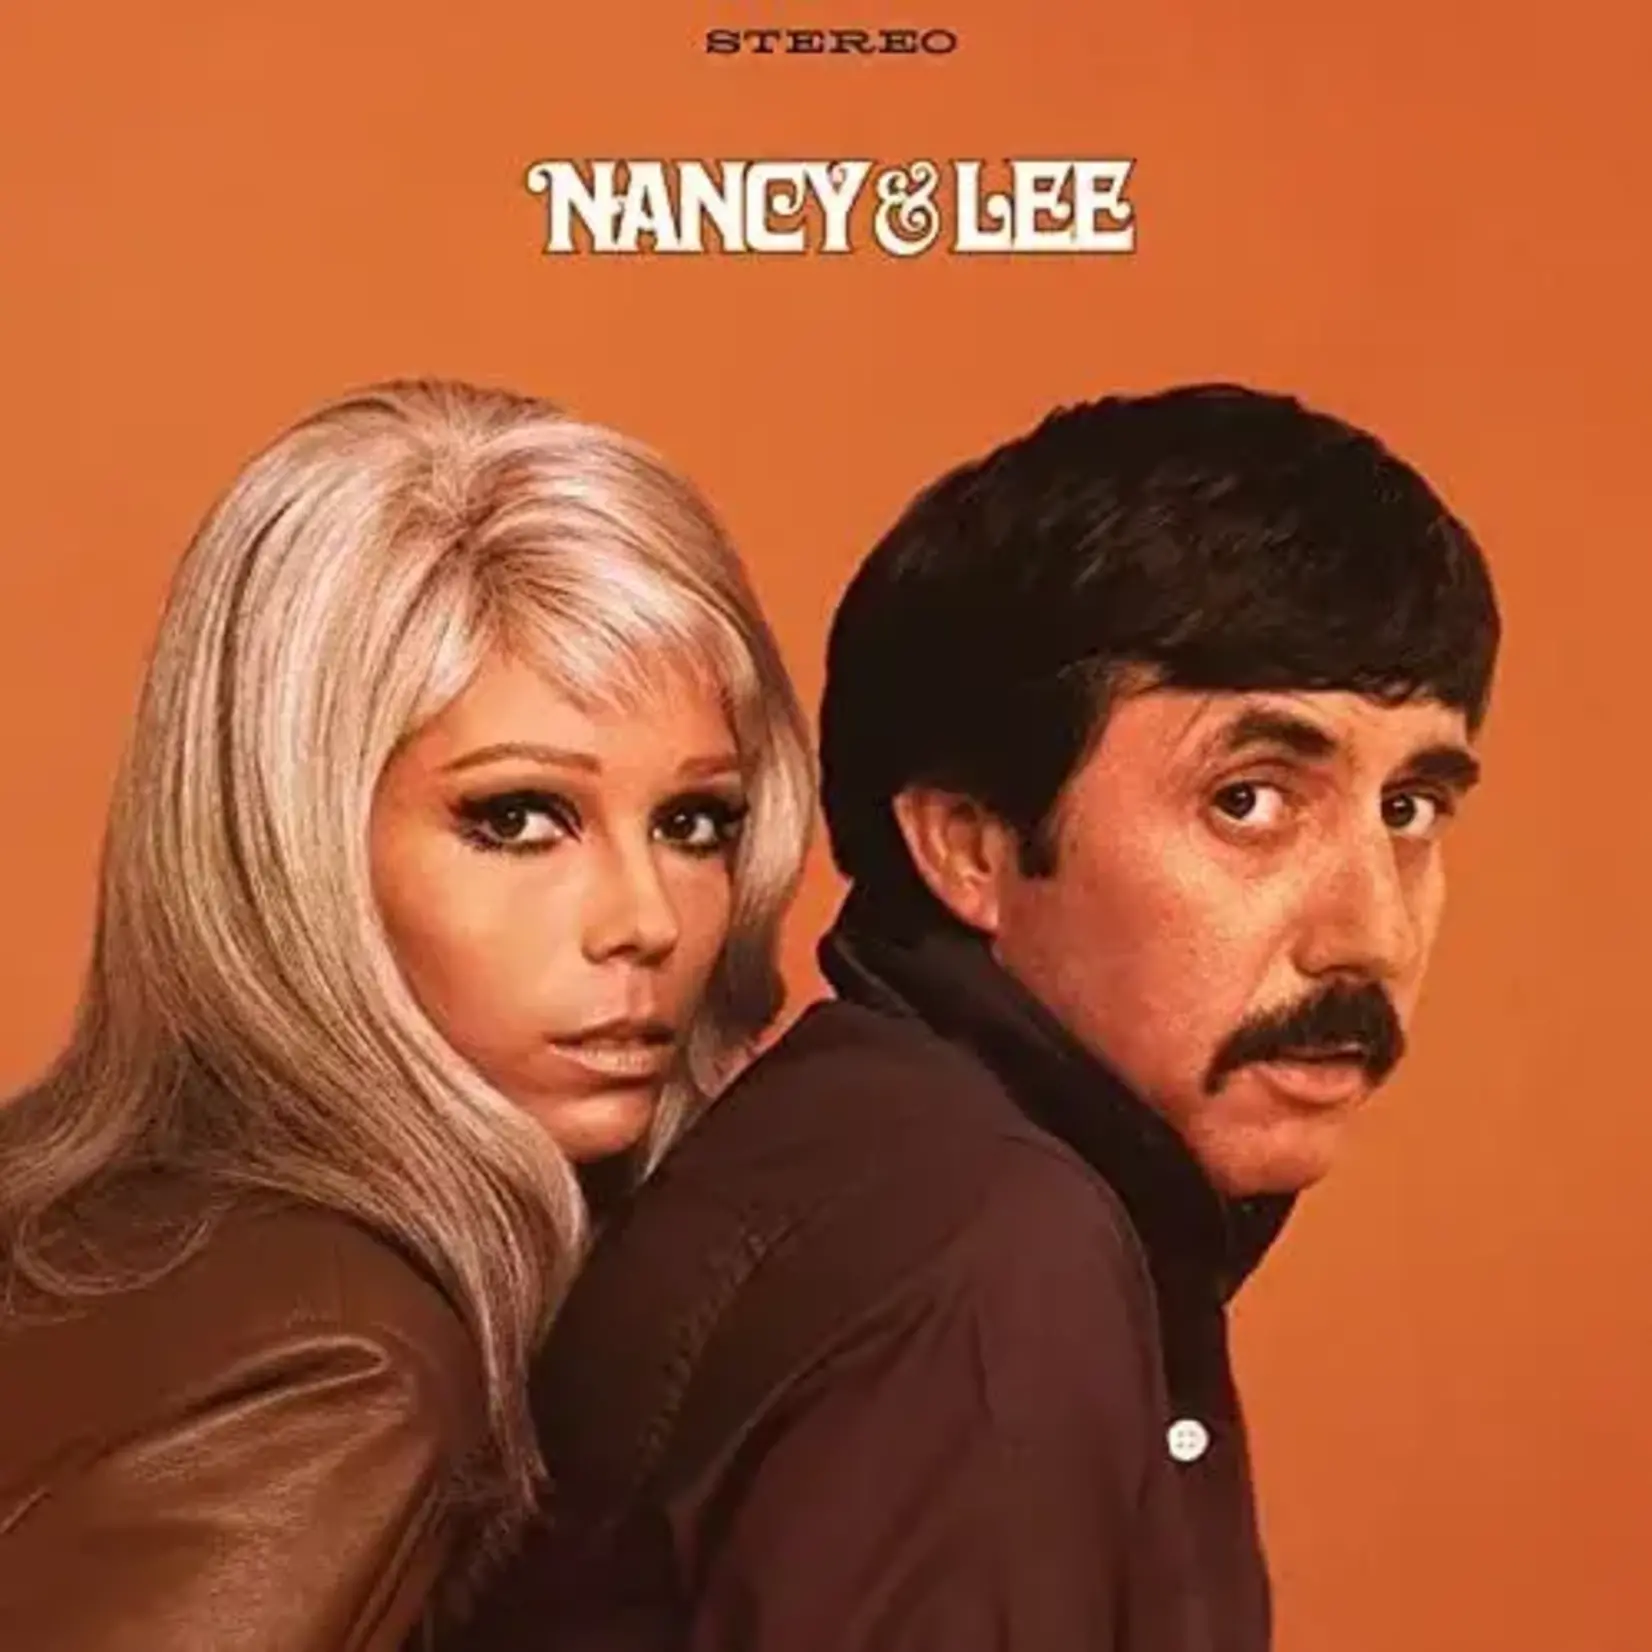 [New] Sinatra, Nancy & Lee Hazlewood: Nancy & Lee (metallic gold & clear vinyl) [LIGHT IN THE ATTIC]